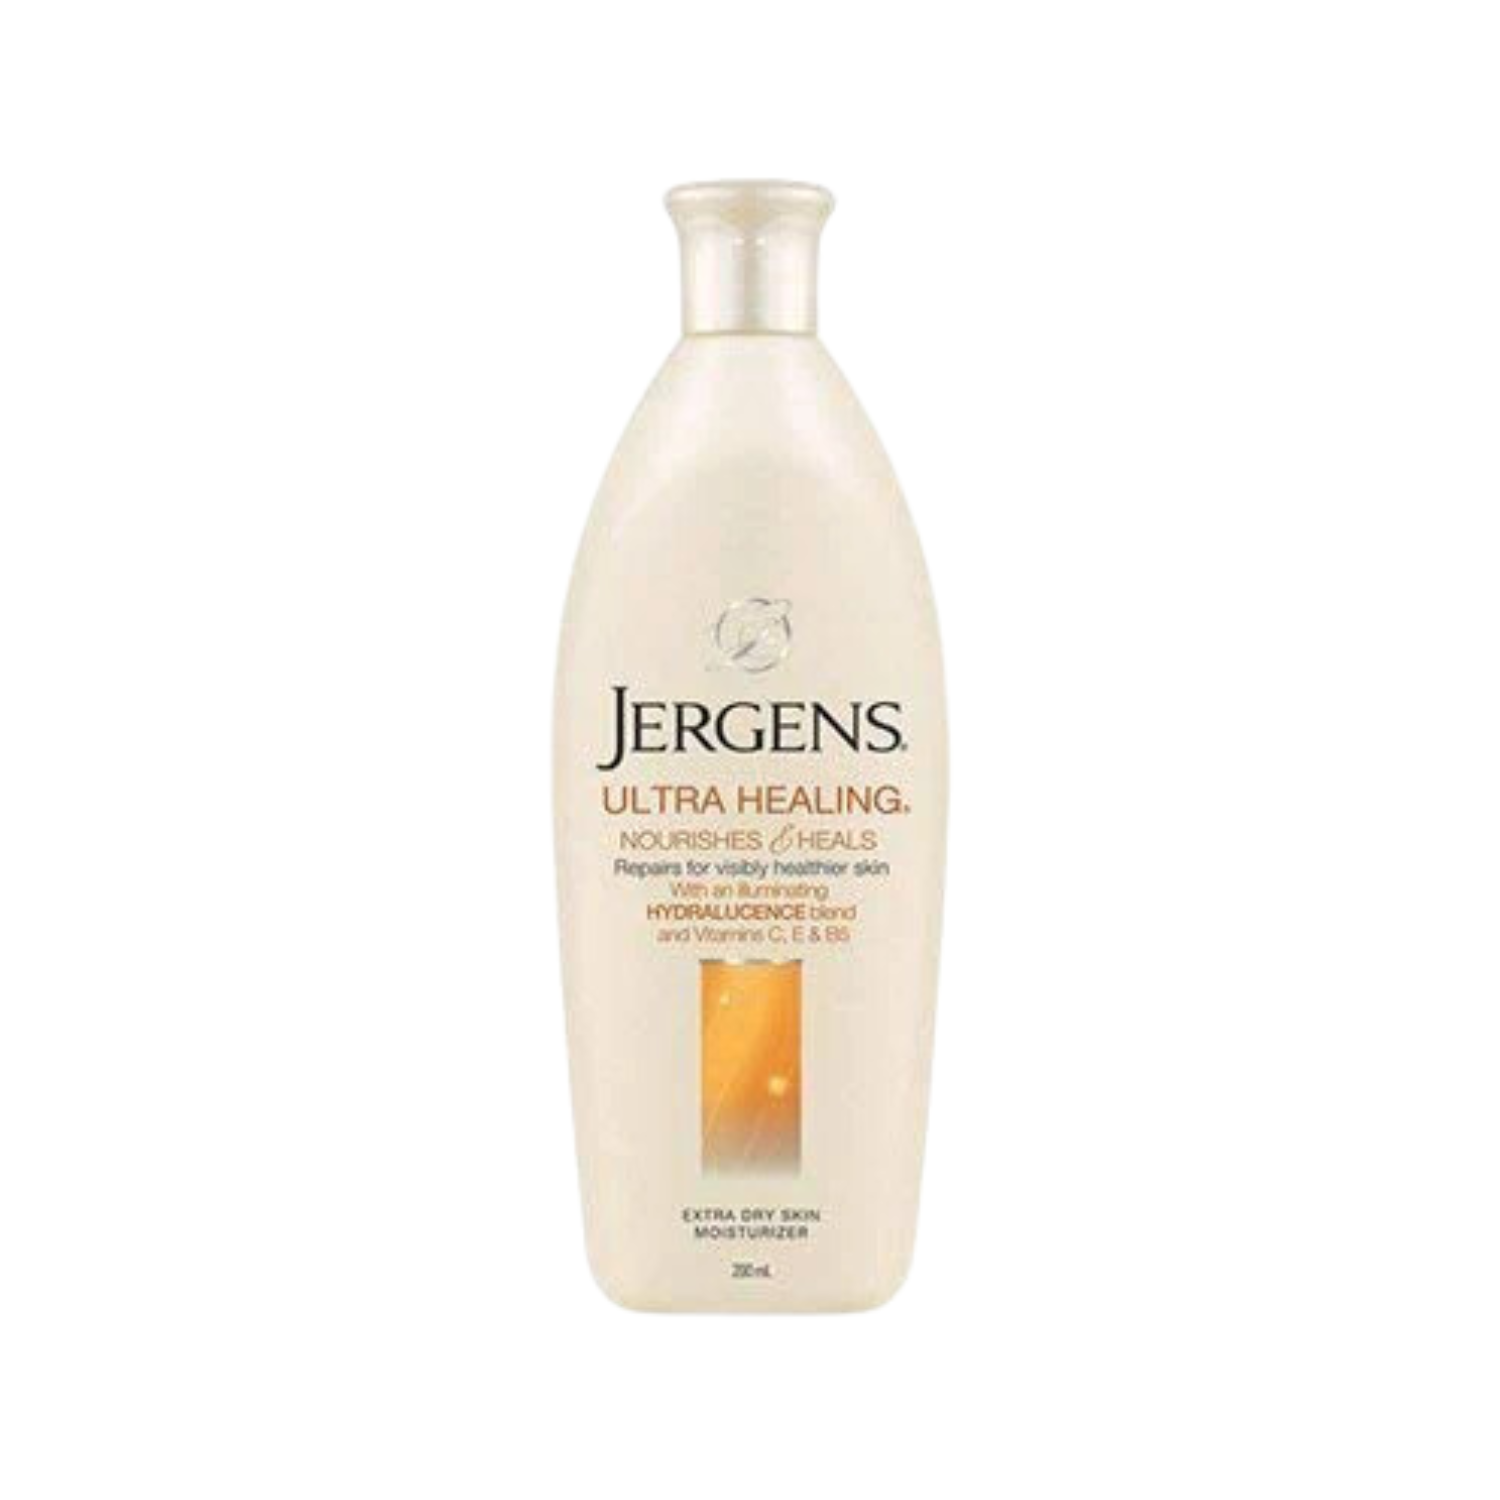 jergens-ultra-healing-with-vitamin-c-e-b5-200ml